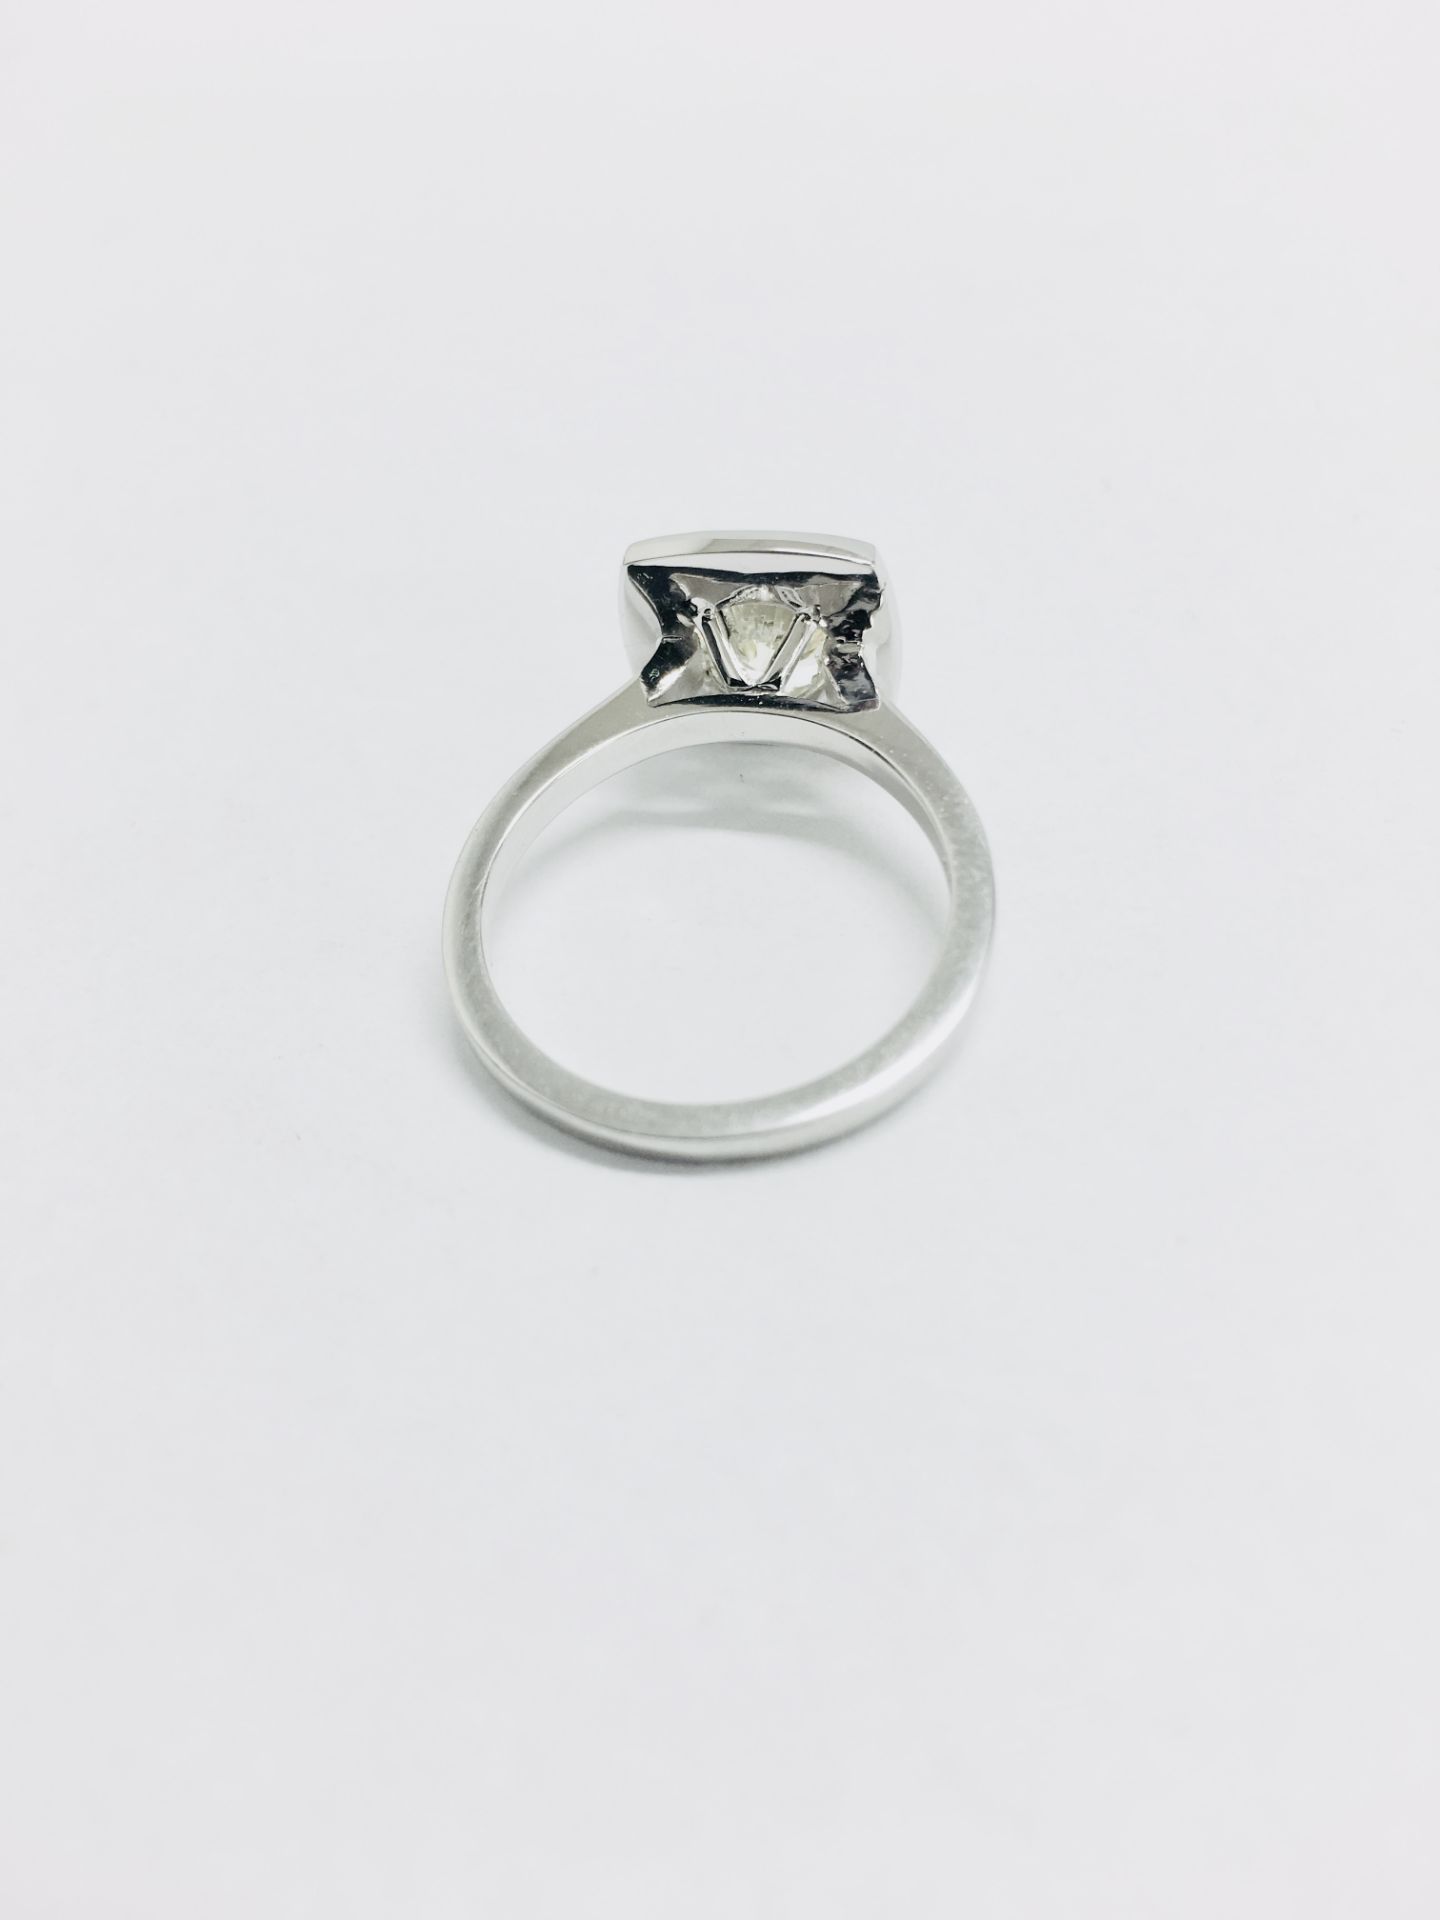 18ct white gold Handmade Halo style ring,0.50ct vs grade h colour diamond(clarity enhanced) - Image 4 of 5